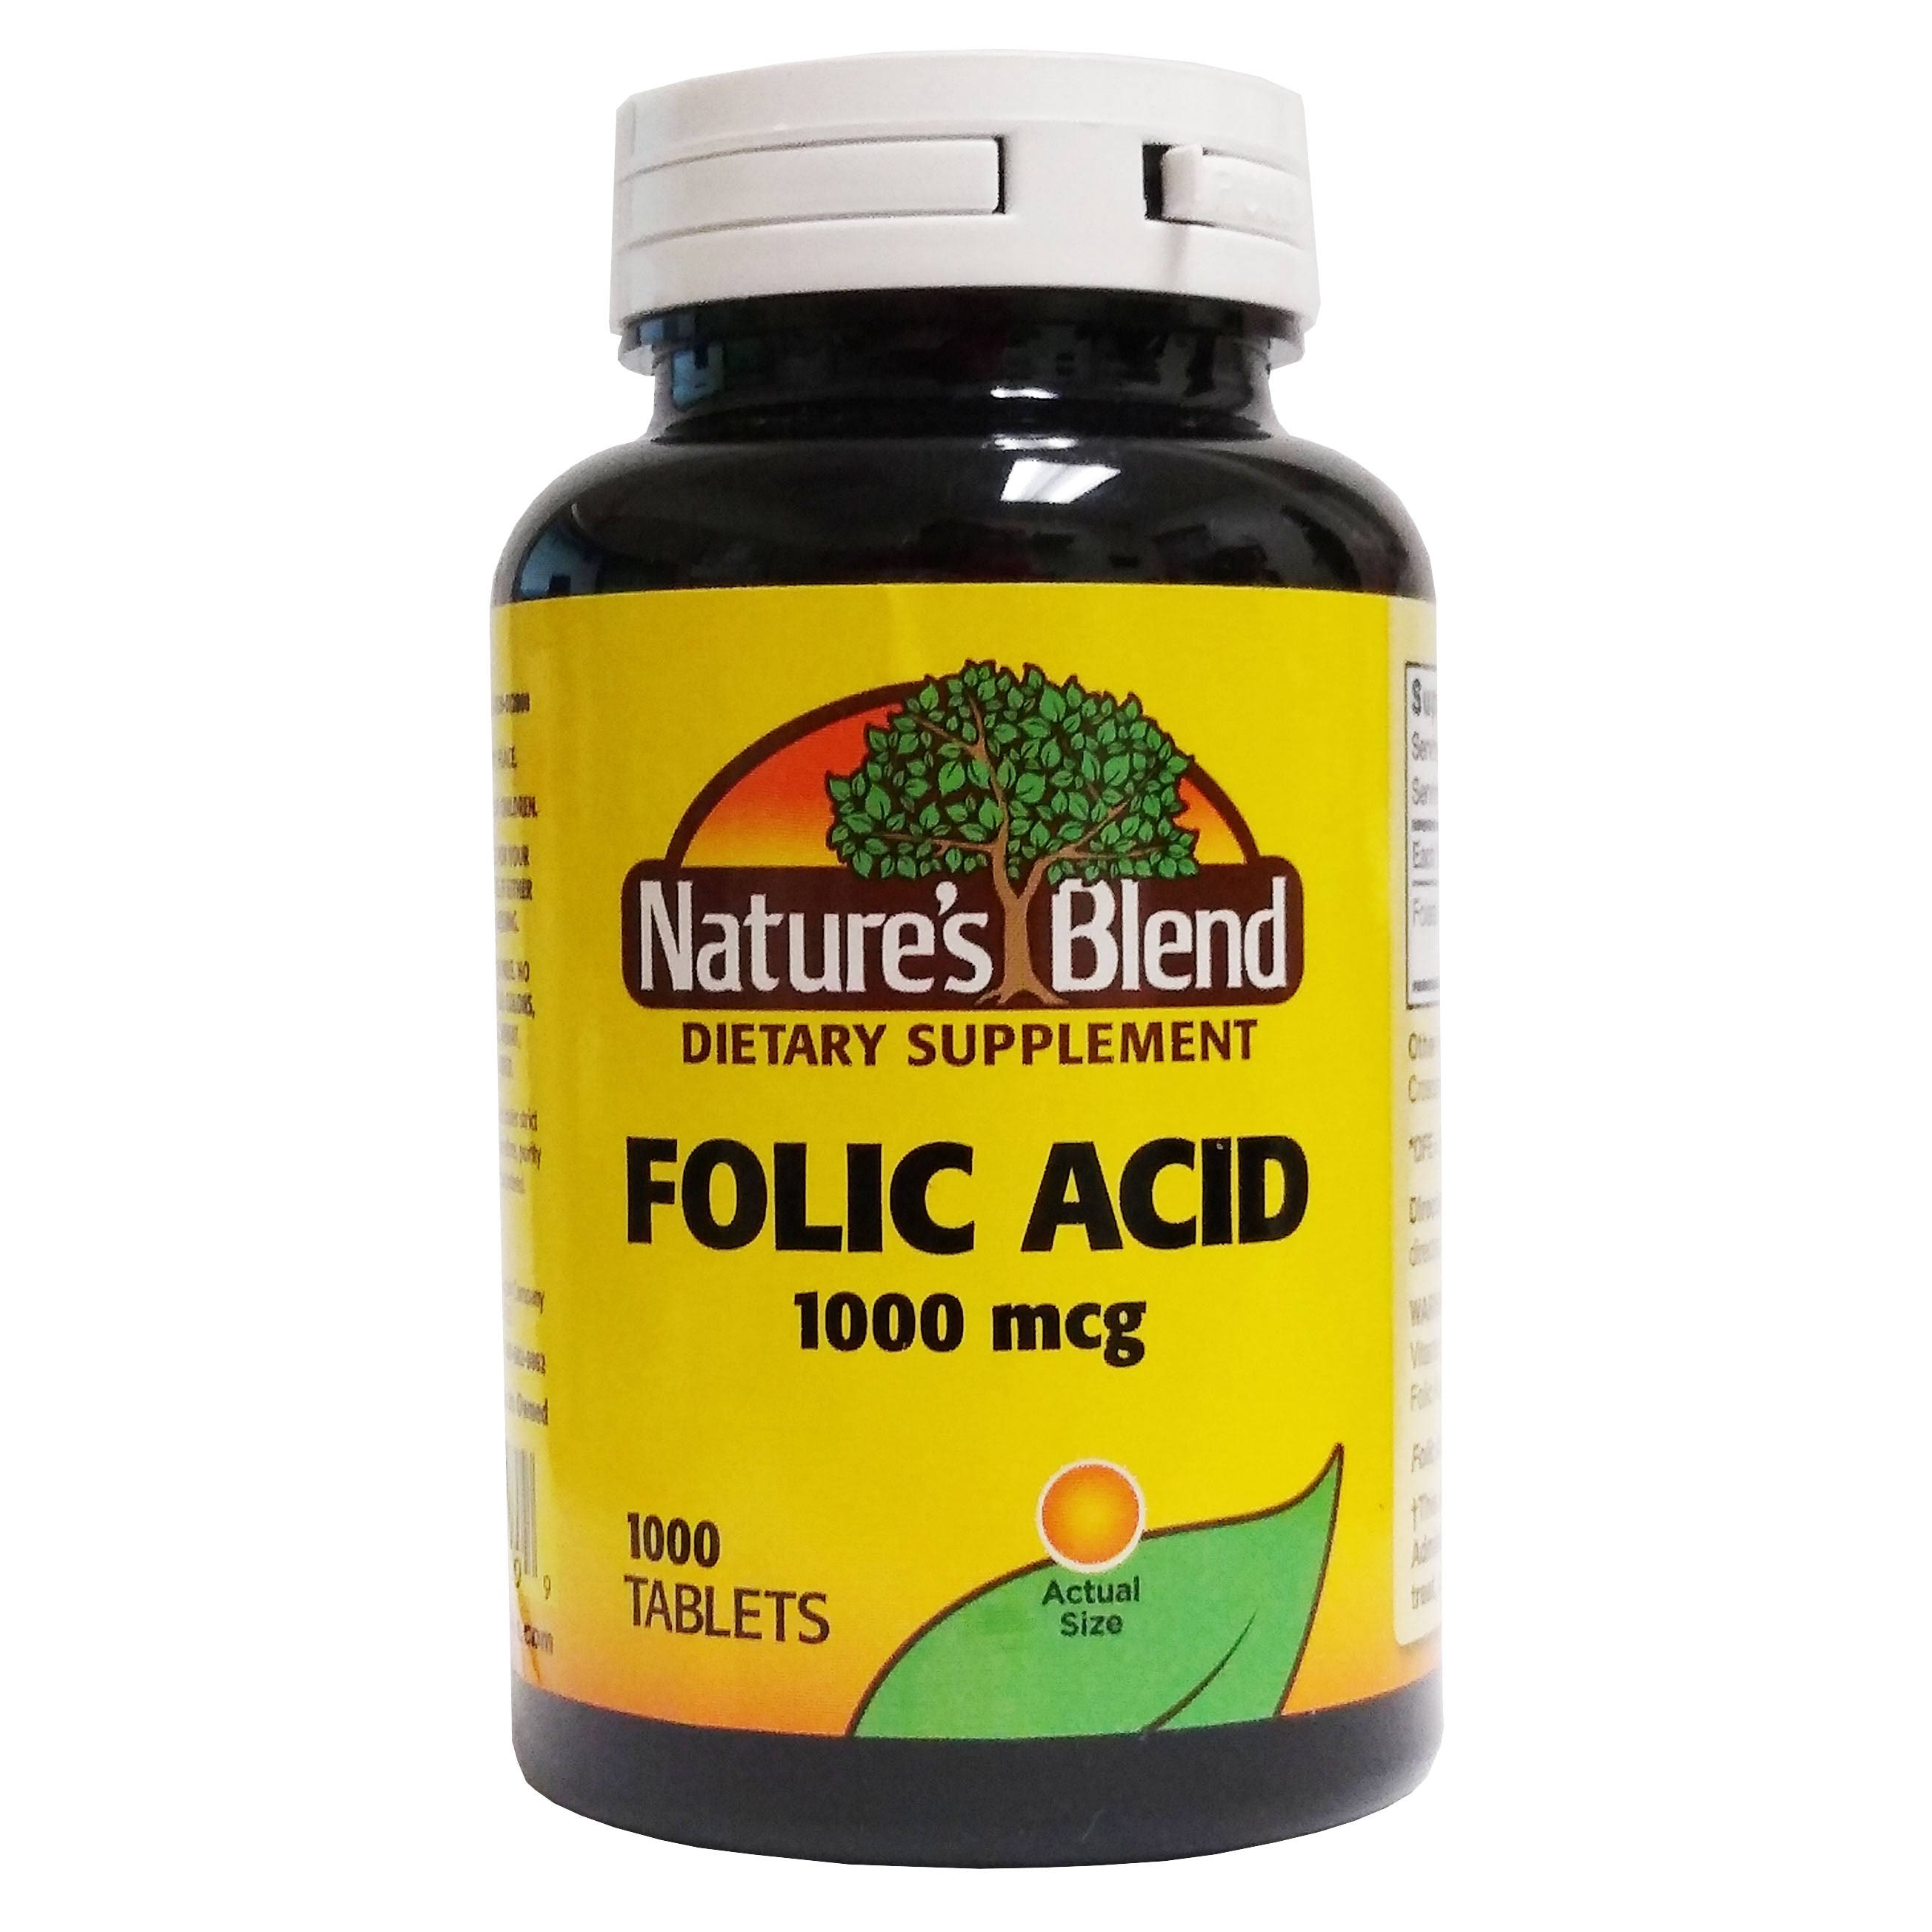 Nature's Blend Folic Acid Supplement - 1000 mcg, 1000ct